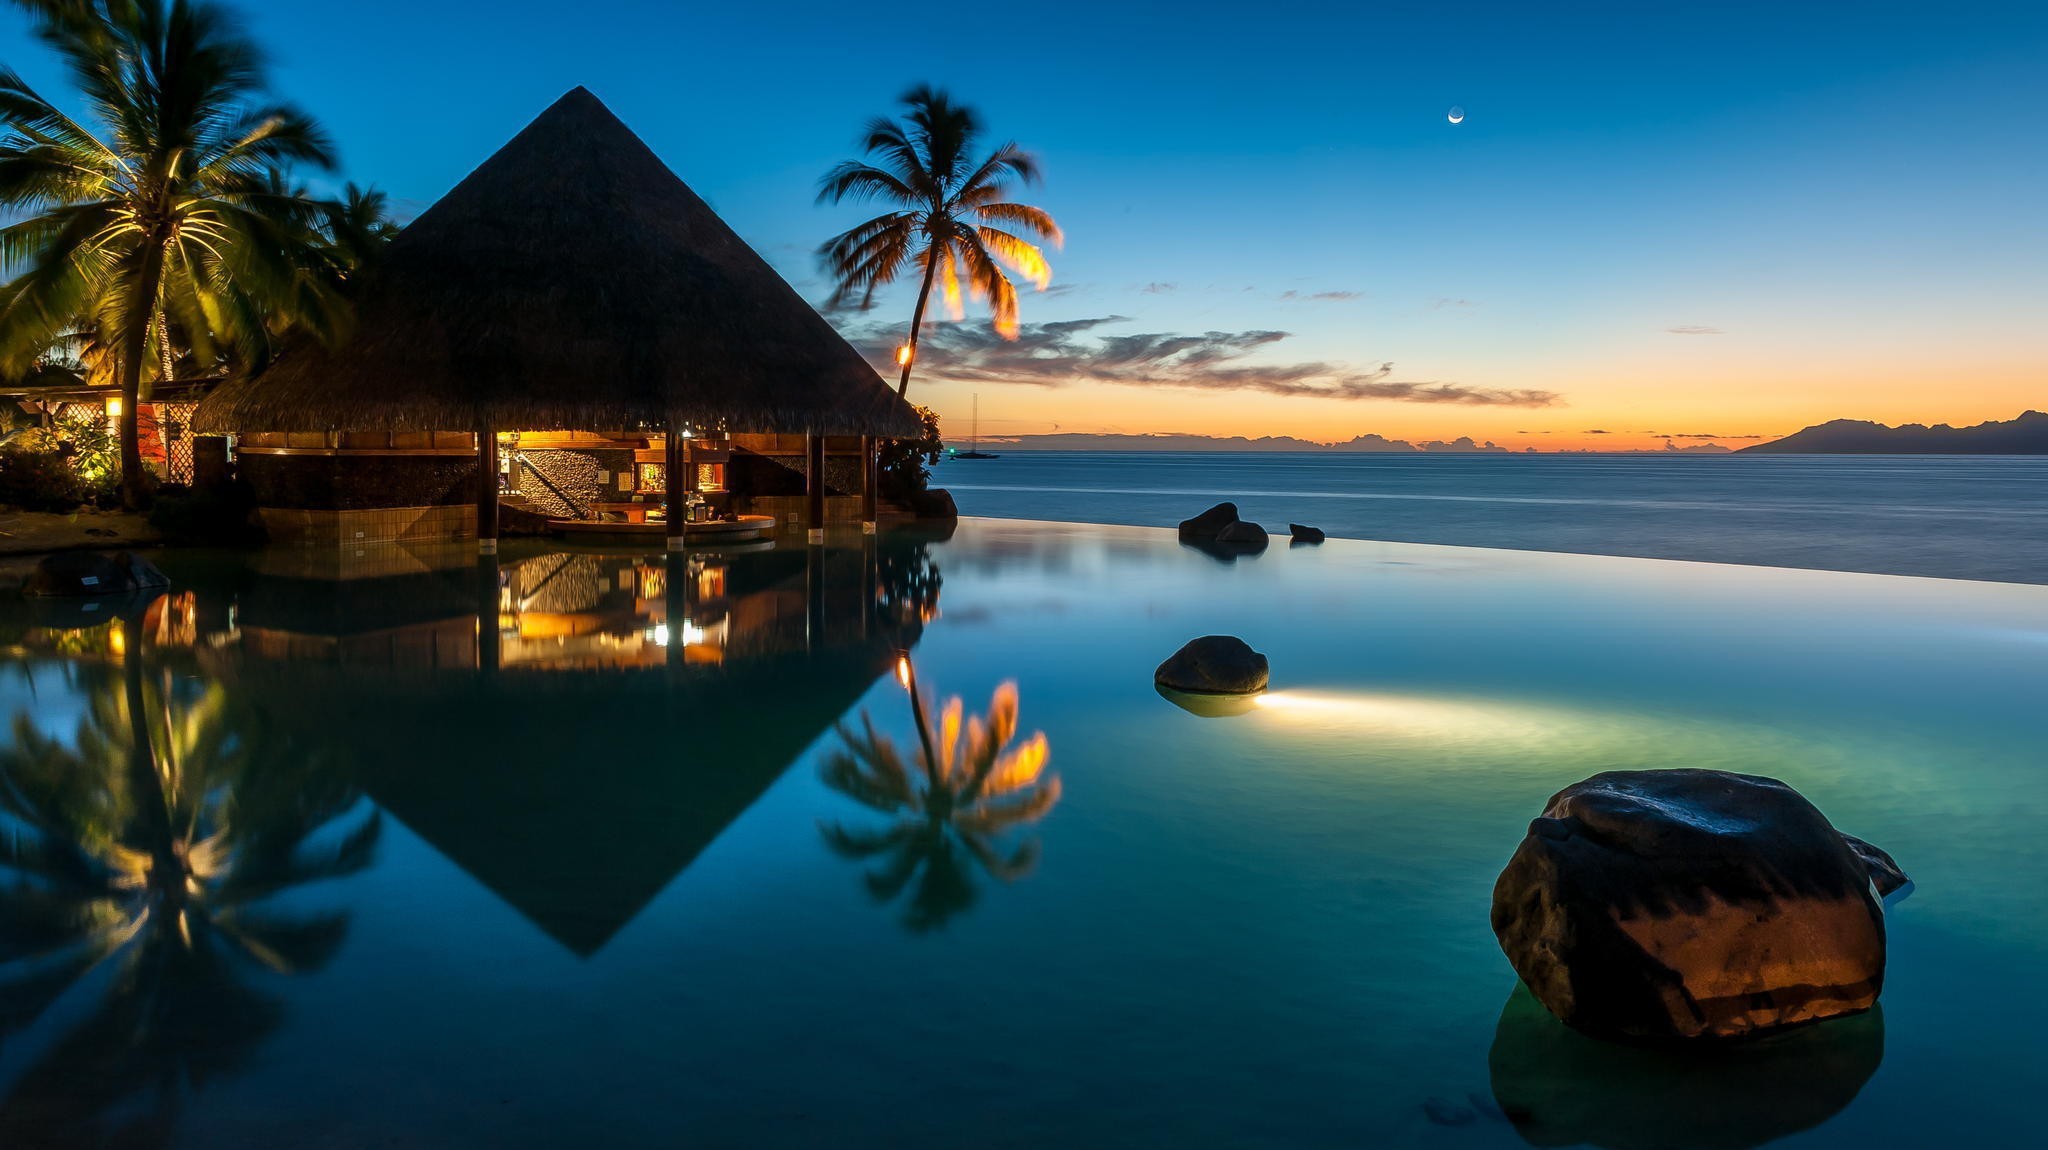 General 2048x1150 bungalow palm trees sea sunset horizon resort reflection rocks hut